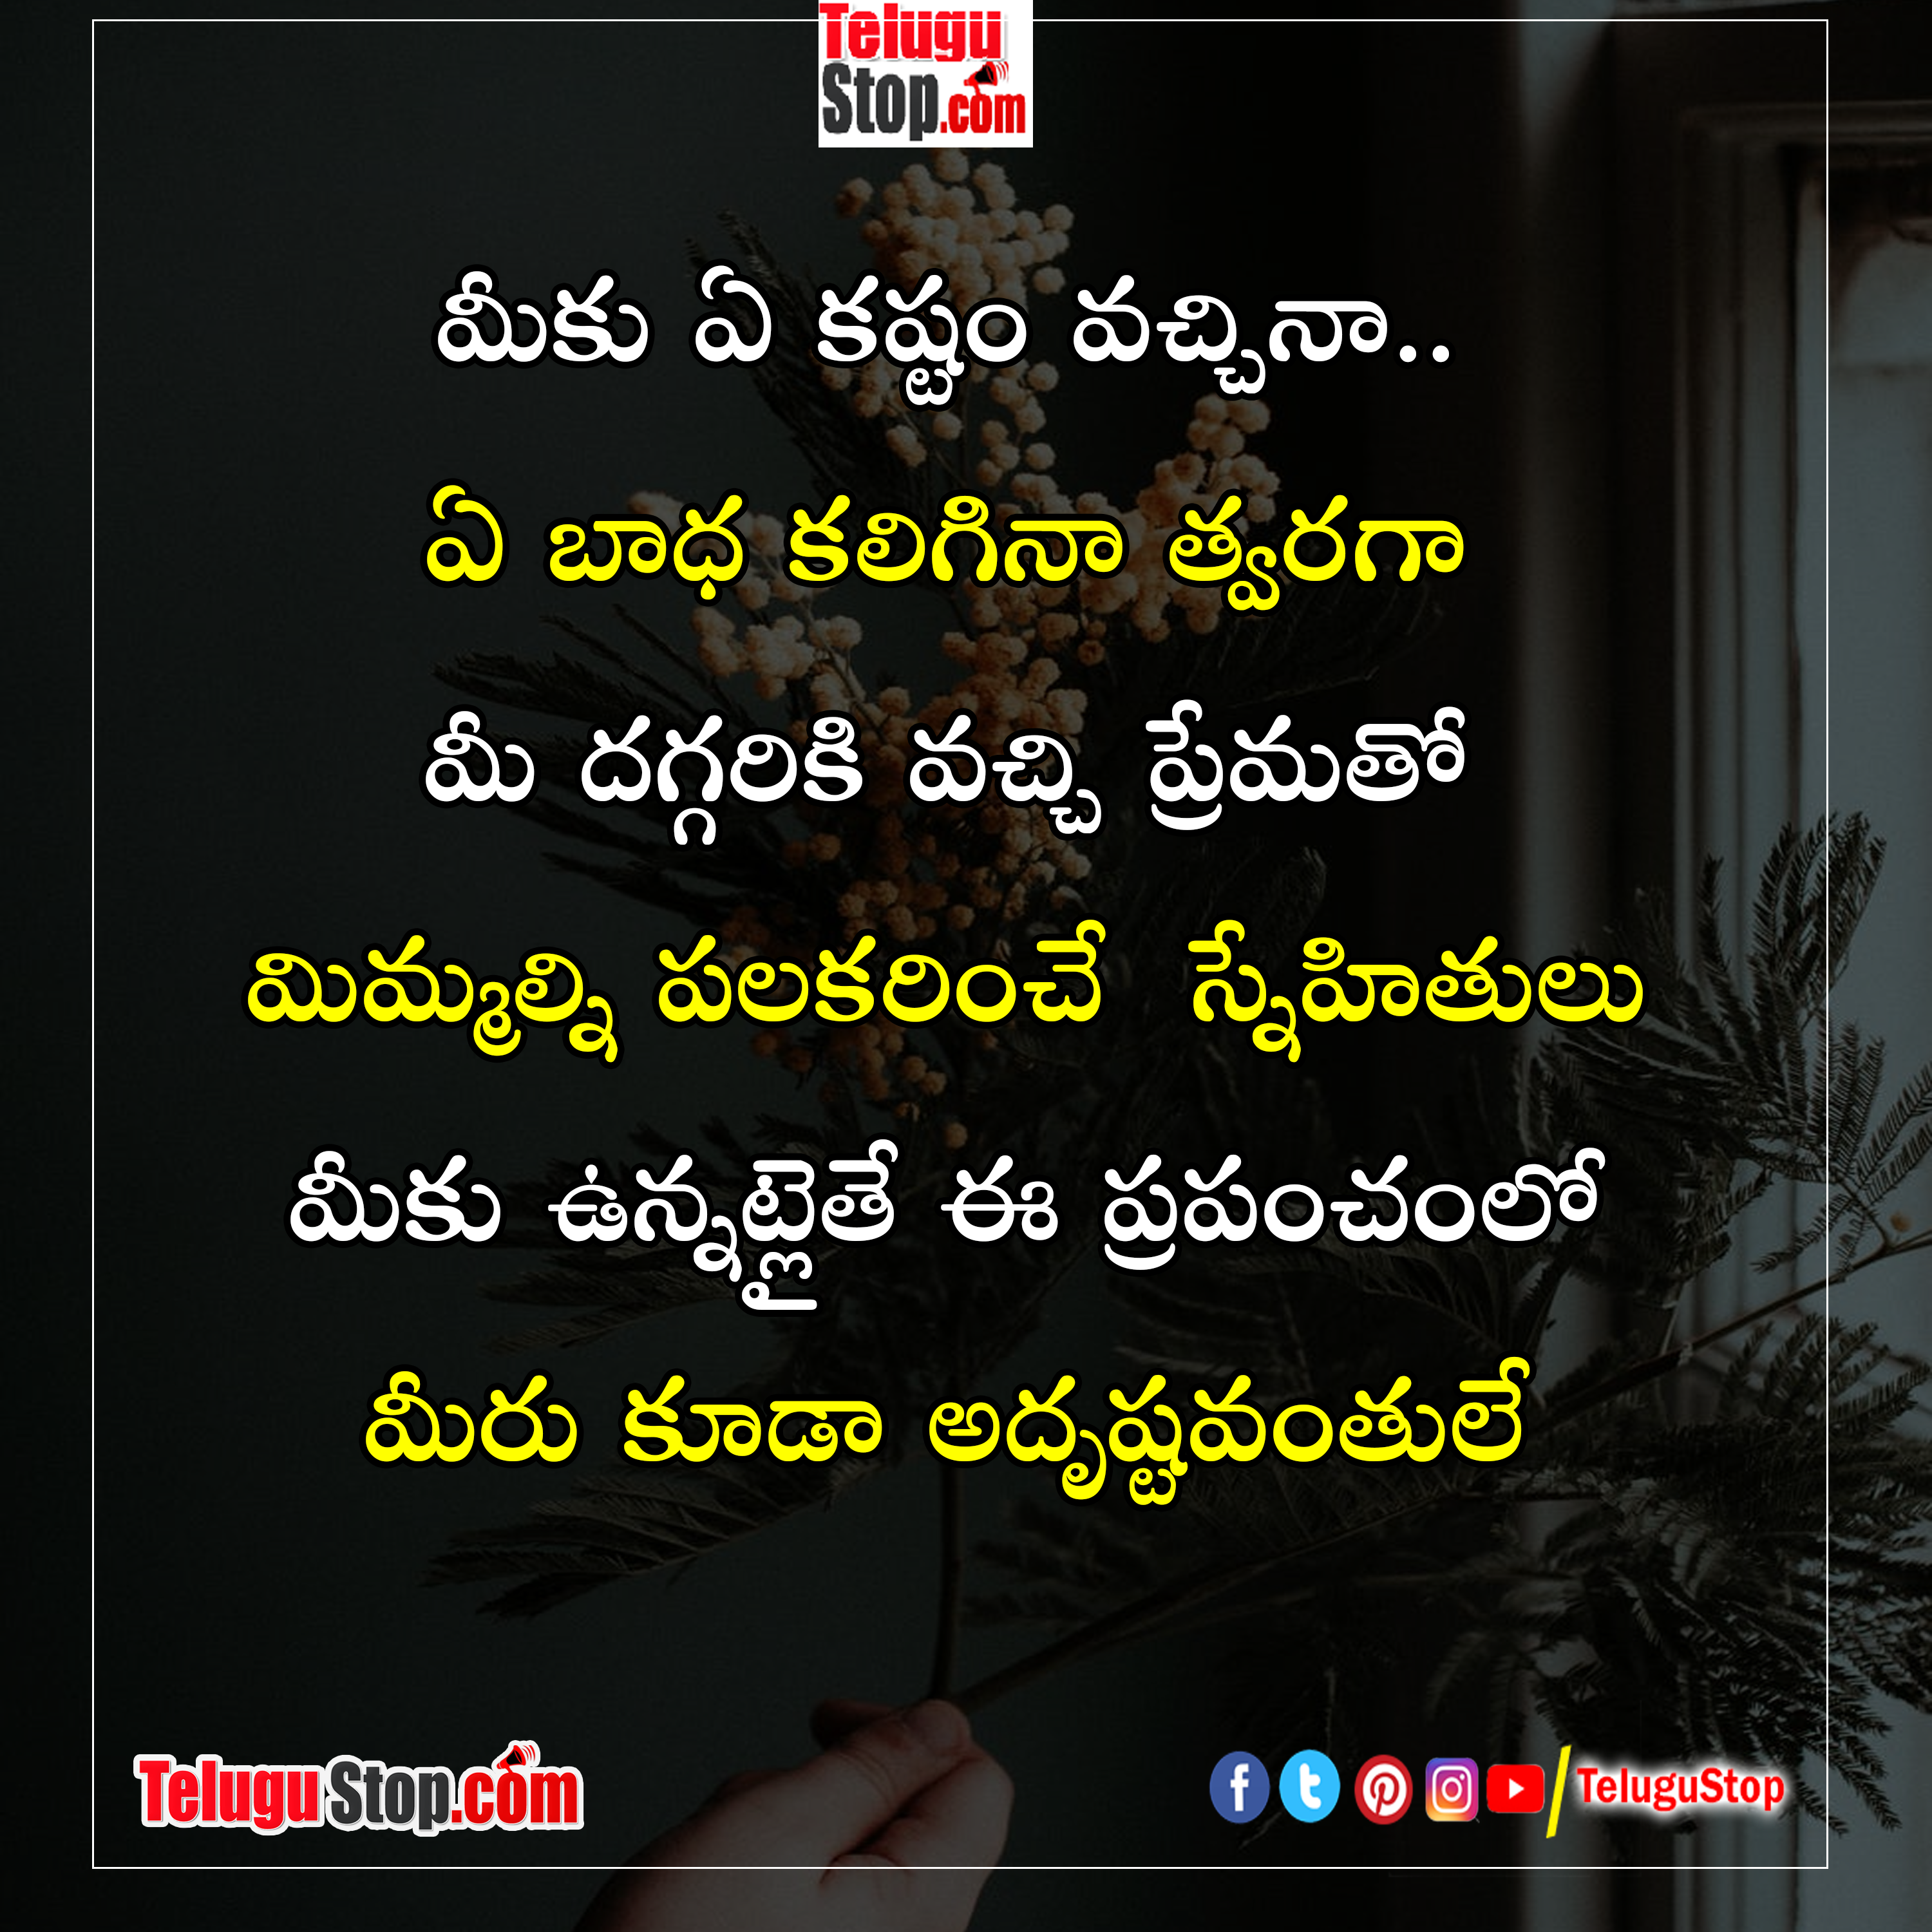 Telugu best friends quotes telugu download Inspirational Quote